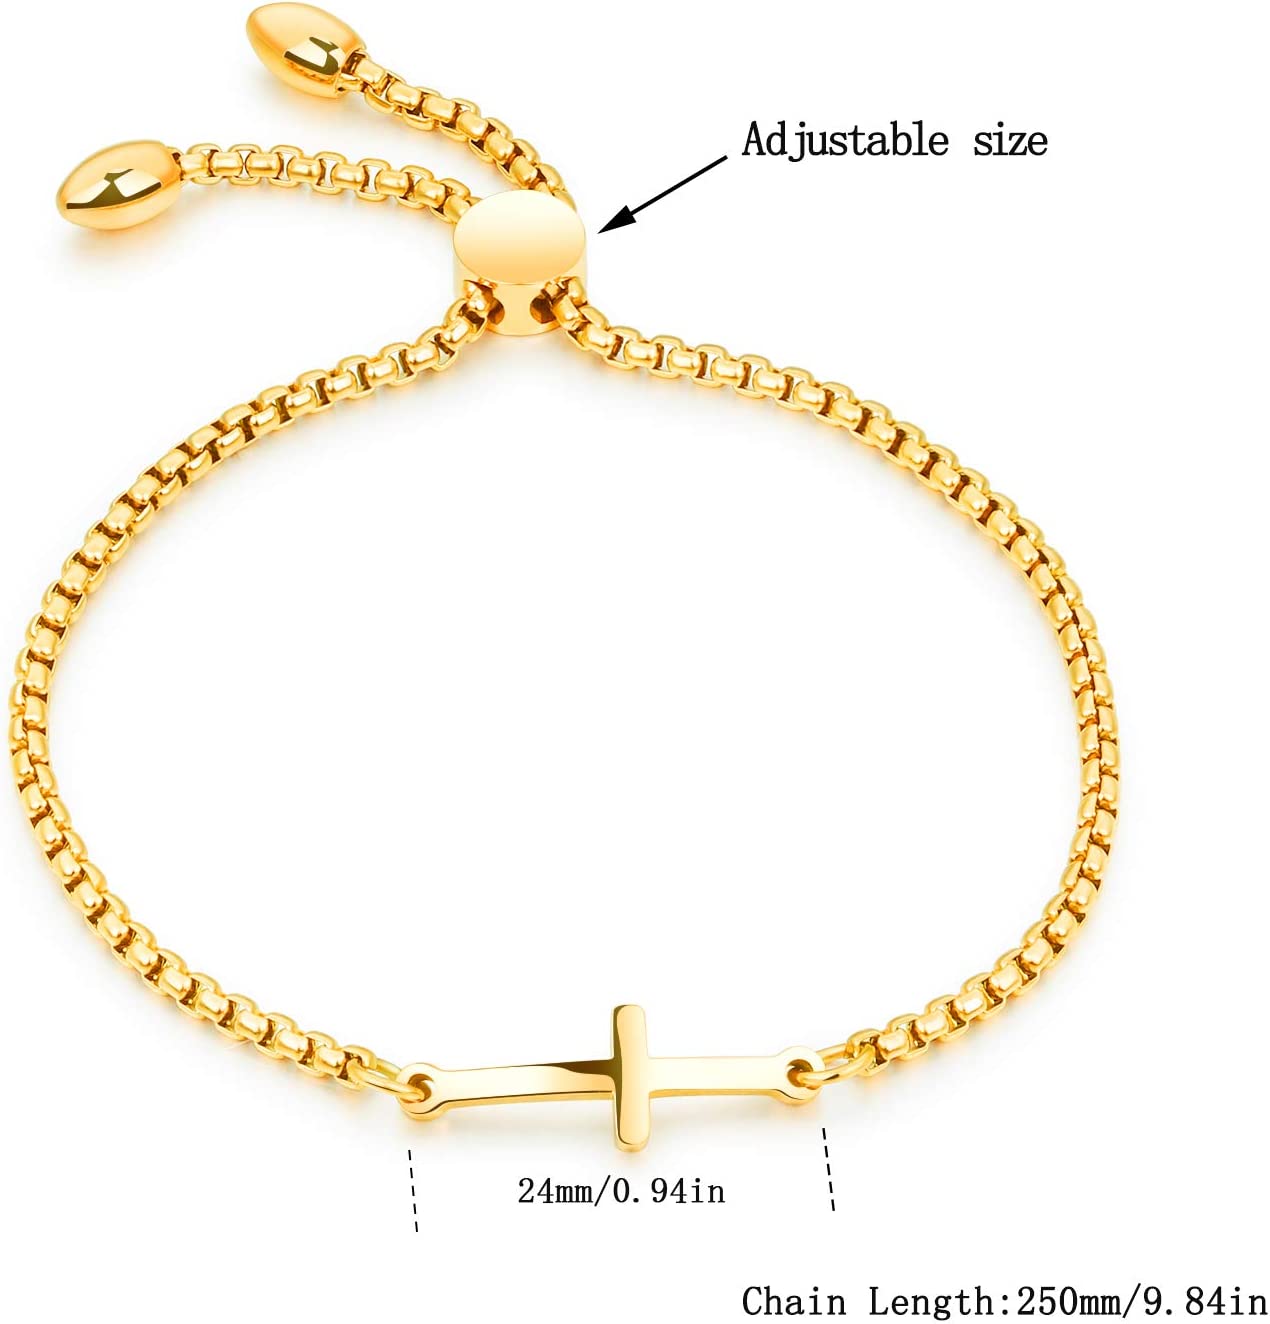 Cocazyw 14K Gold Plated Rose Gold Silver Cross Adjustable Sideways Bracelet for Women Girls,Gold Cross Bracelet Stainless Steel for 